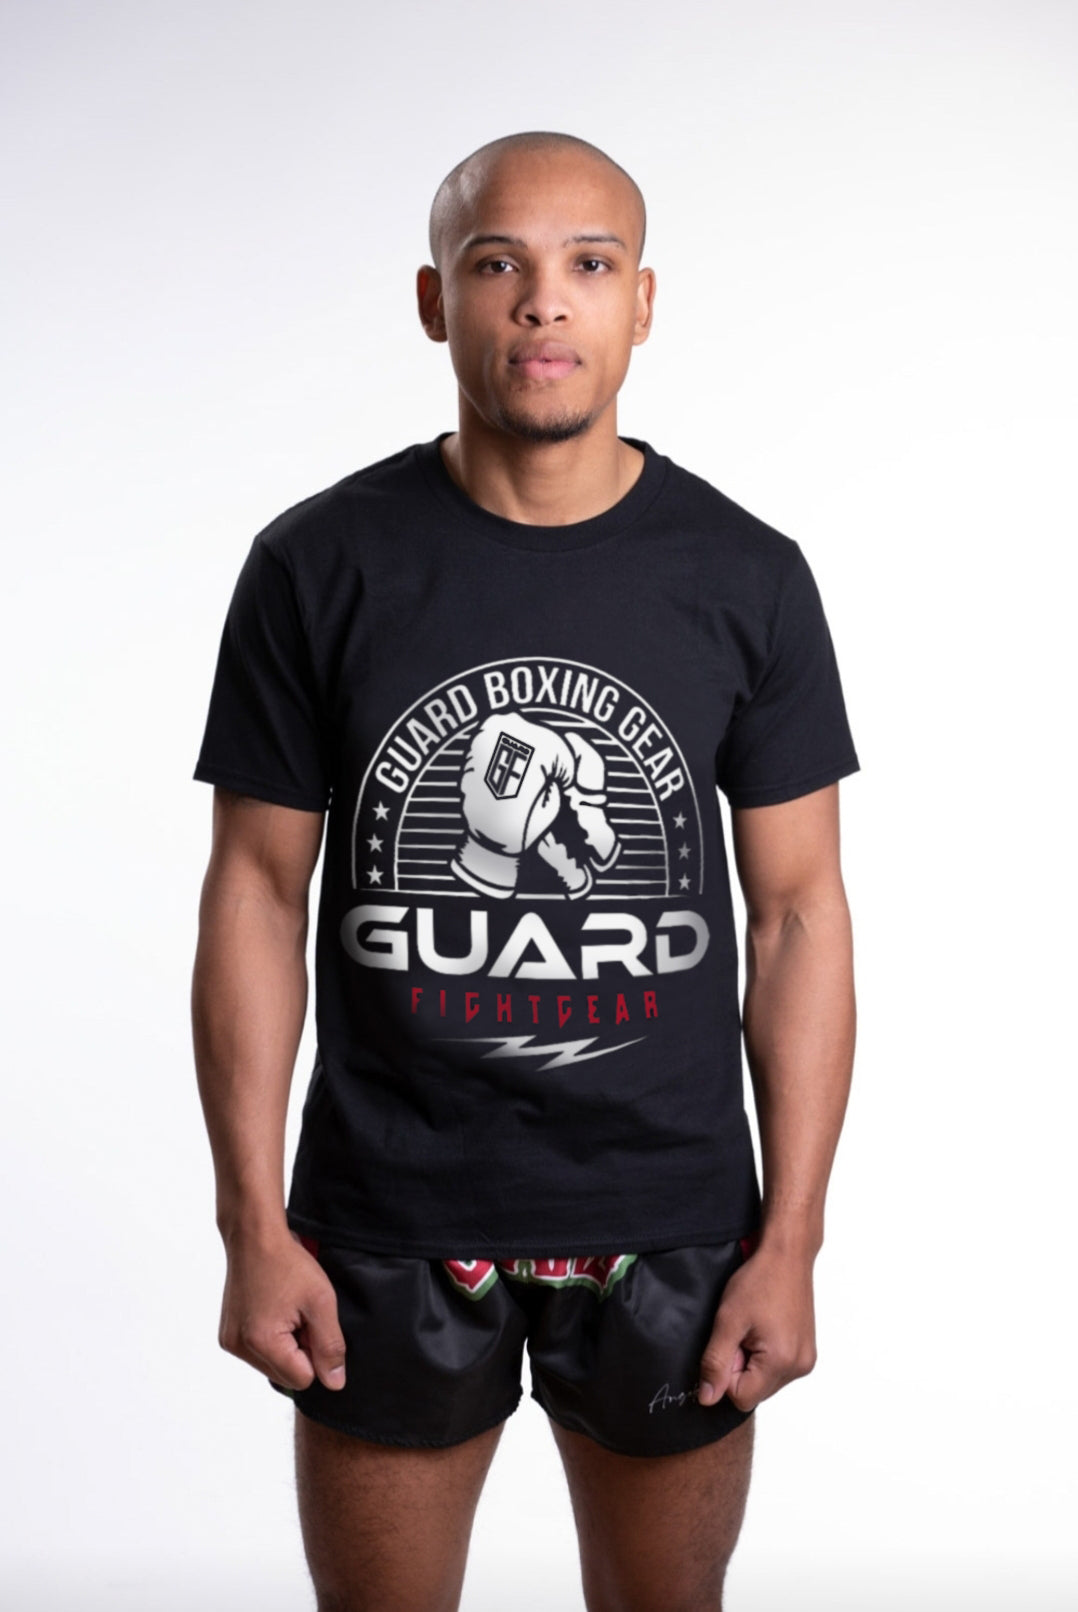 Guard-Fightgear Katoenen T-shirt